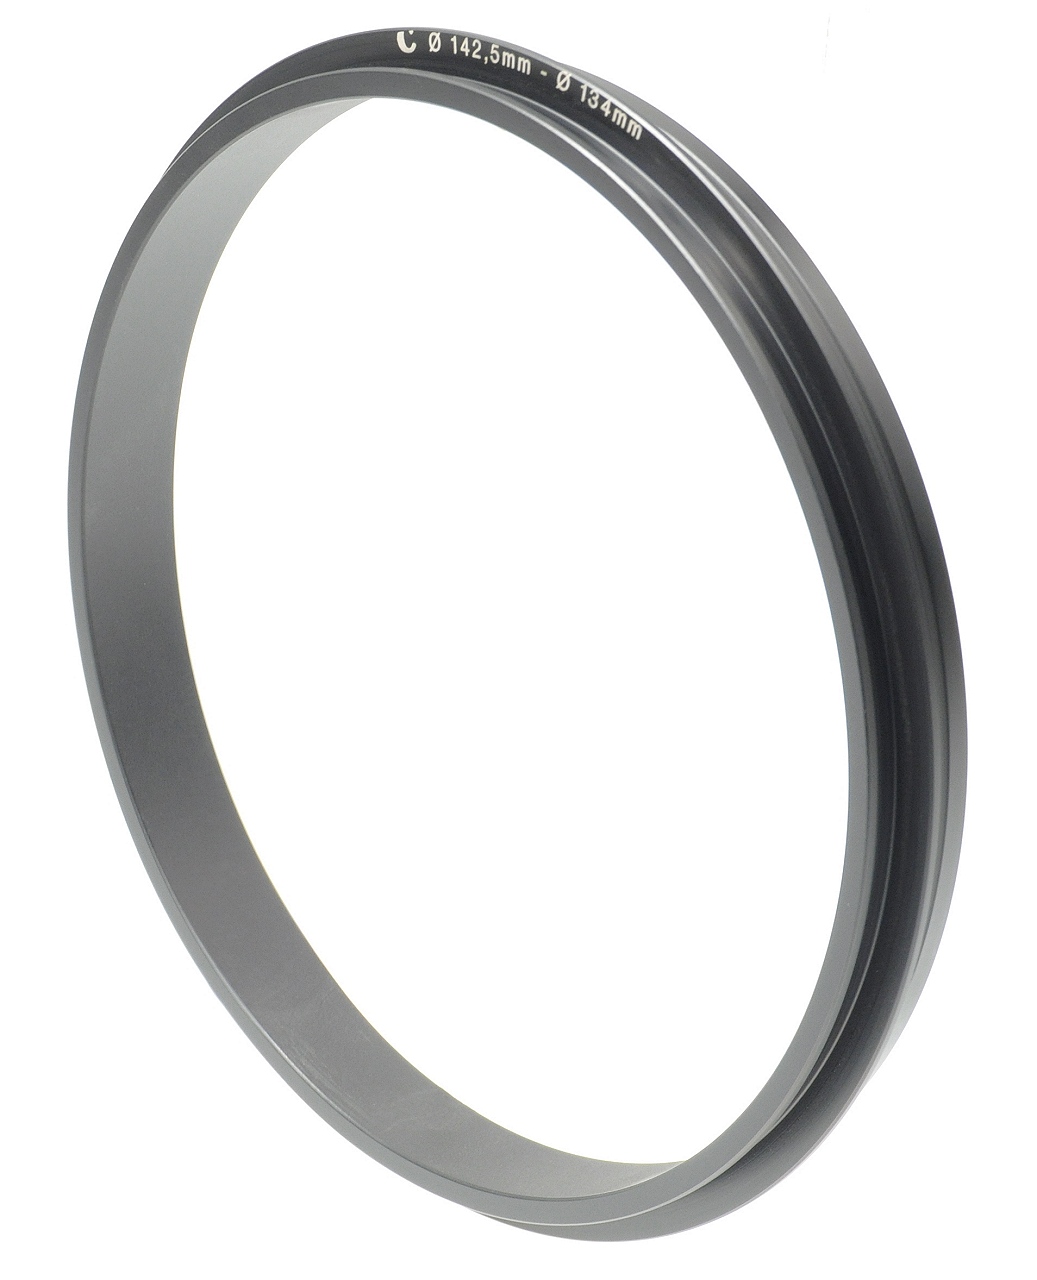 Retaining Ring Ø 142,5:134 mm